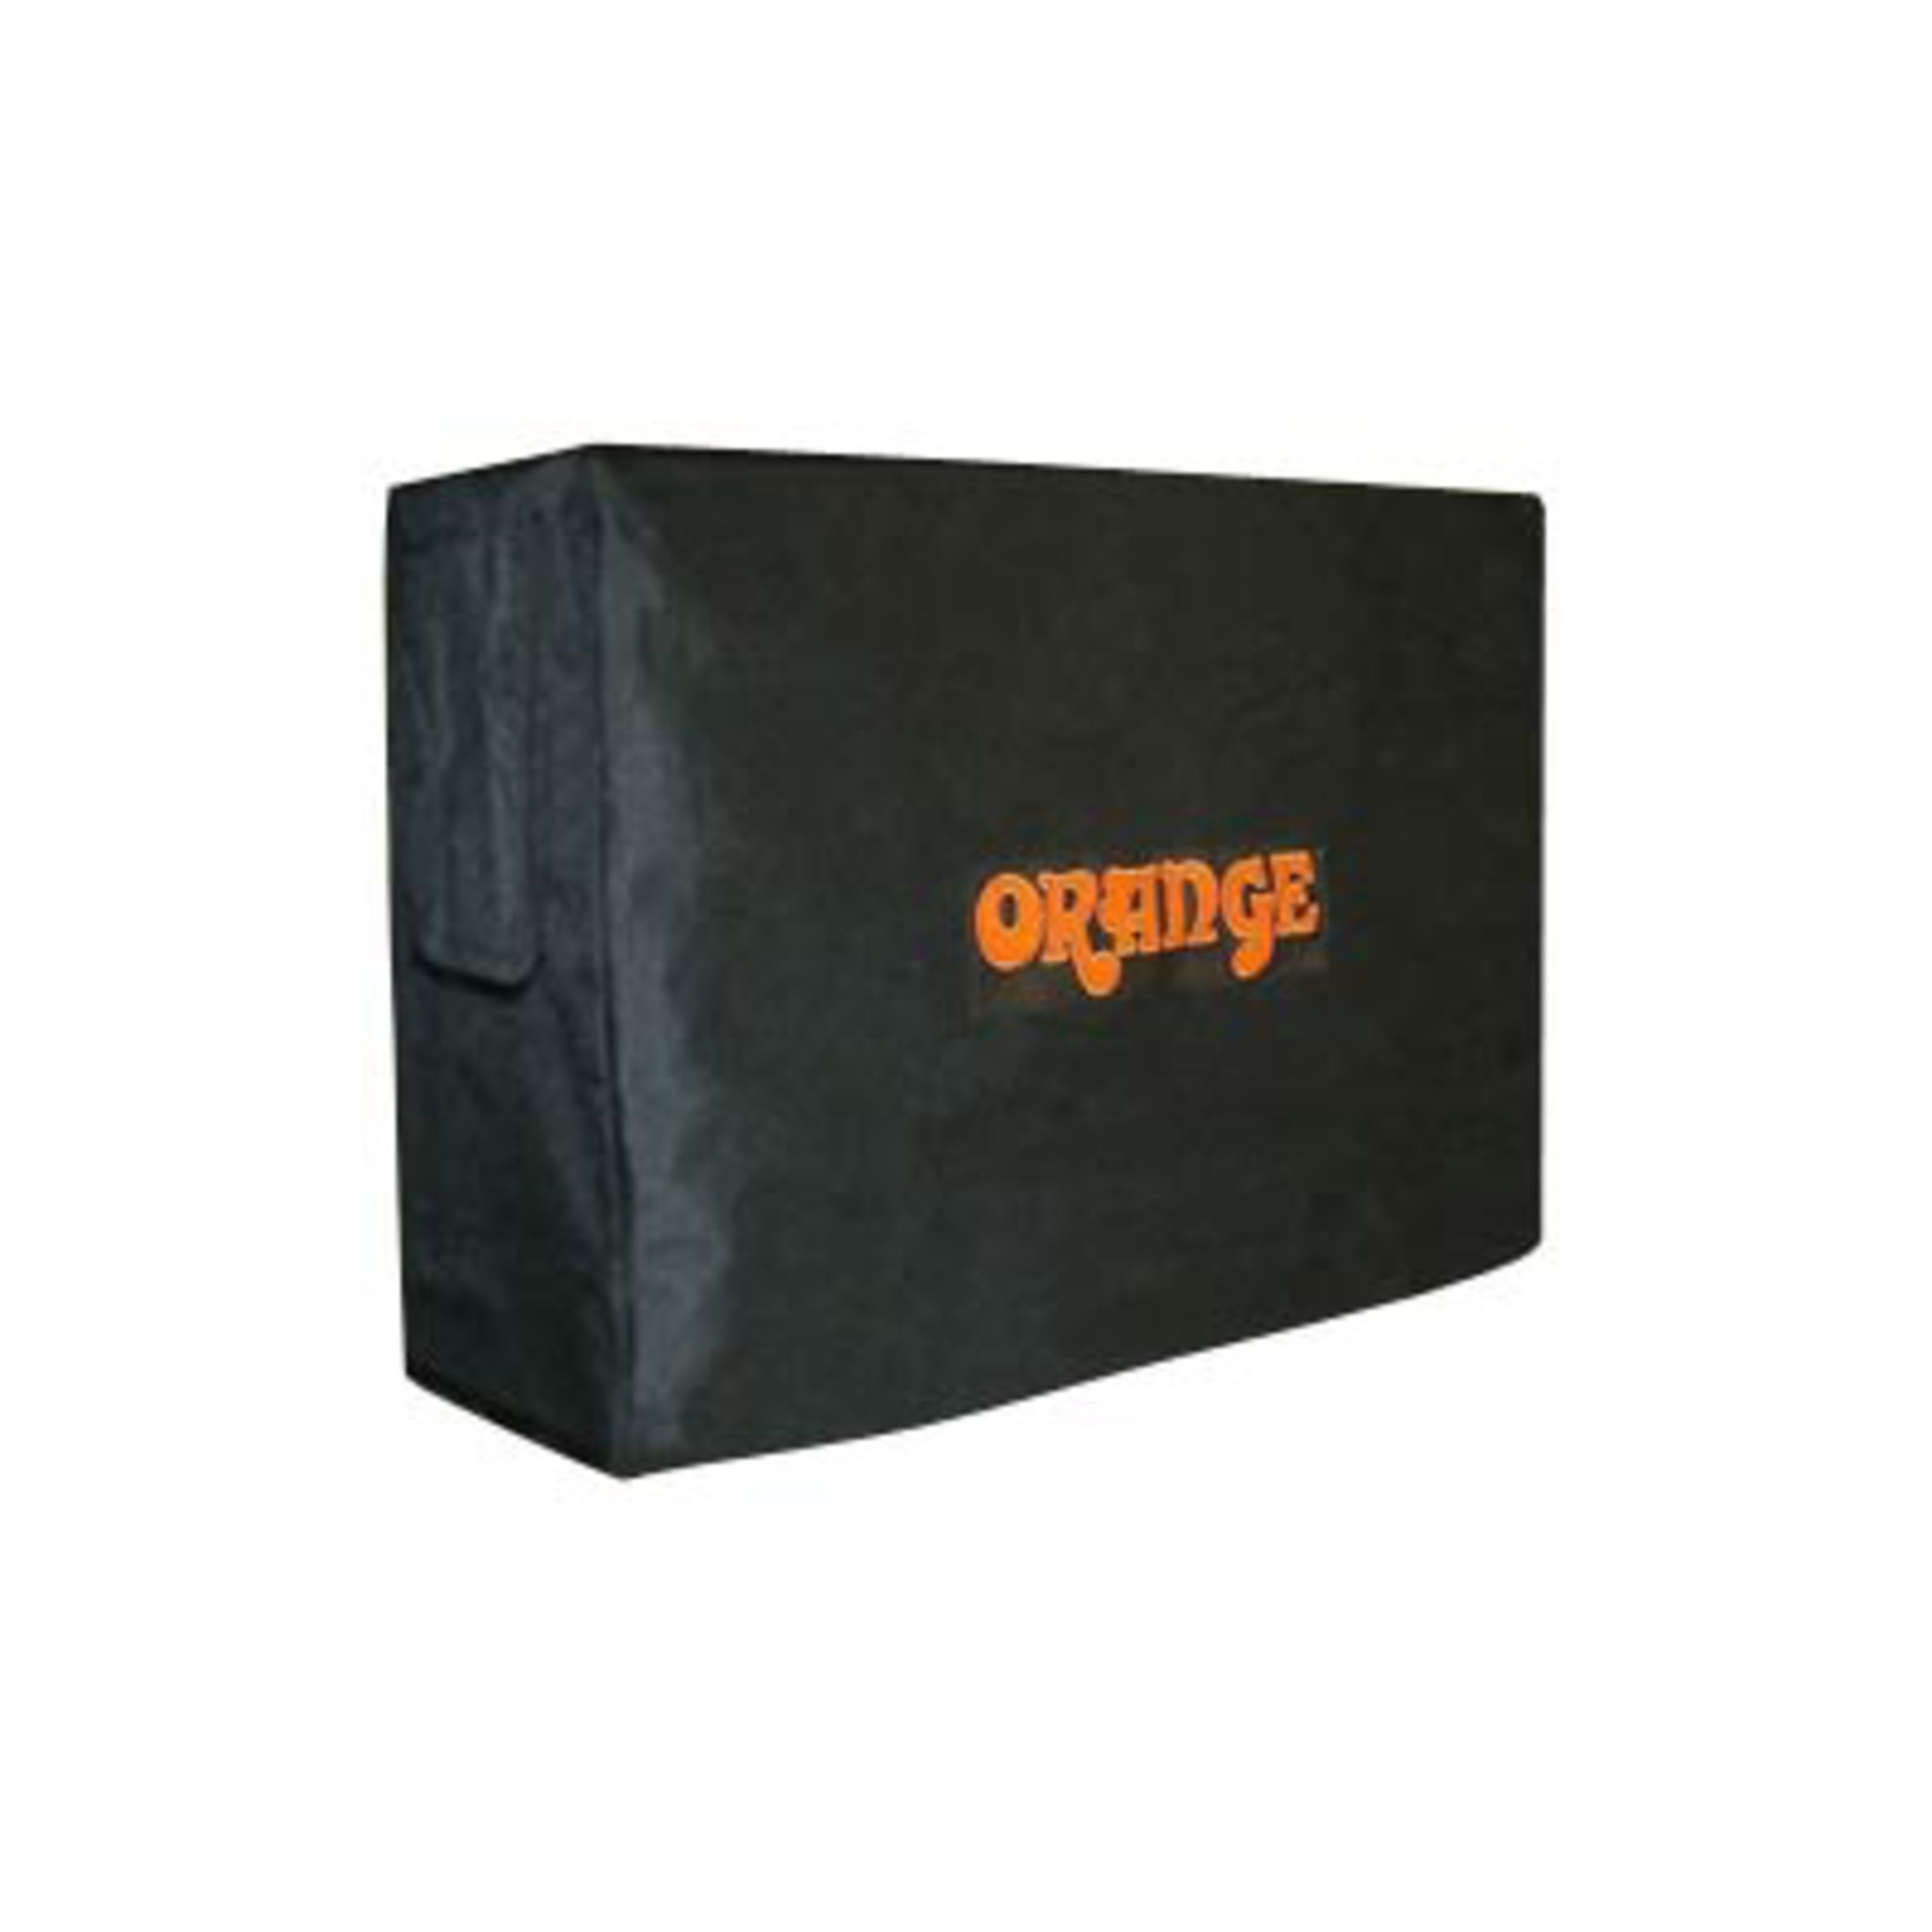 Orange Lautsprechertasche (E-Gitarren Verstärker, Amp und Boxen Cover), PPC112 Cabinet Cover - Cover für Gitarren Equipment